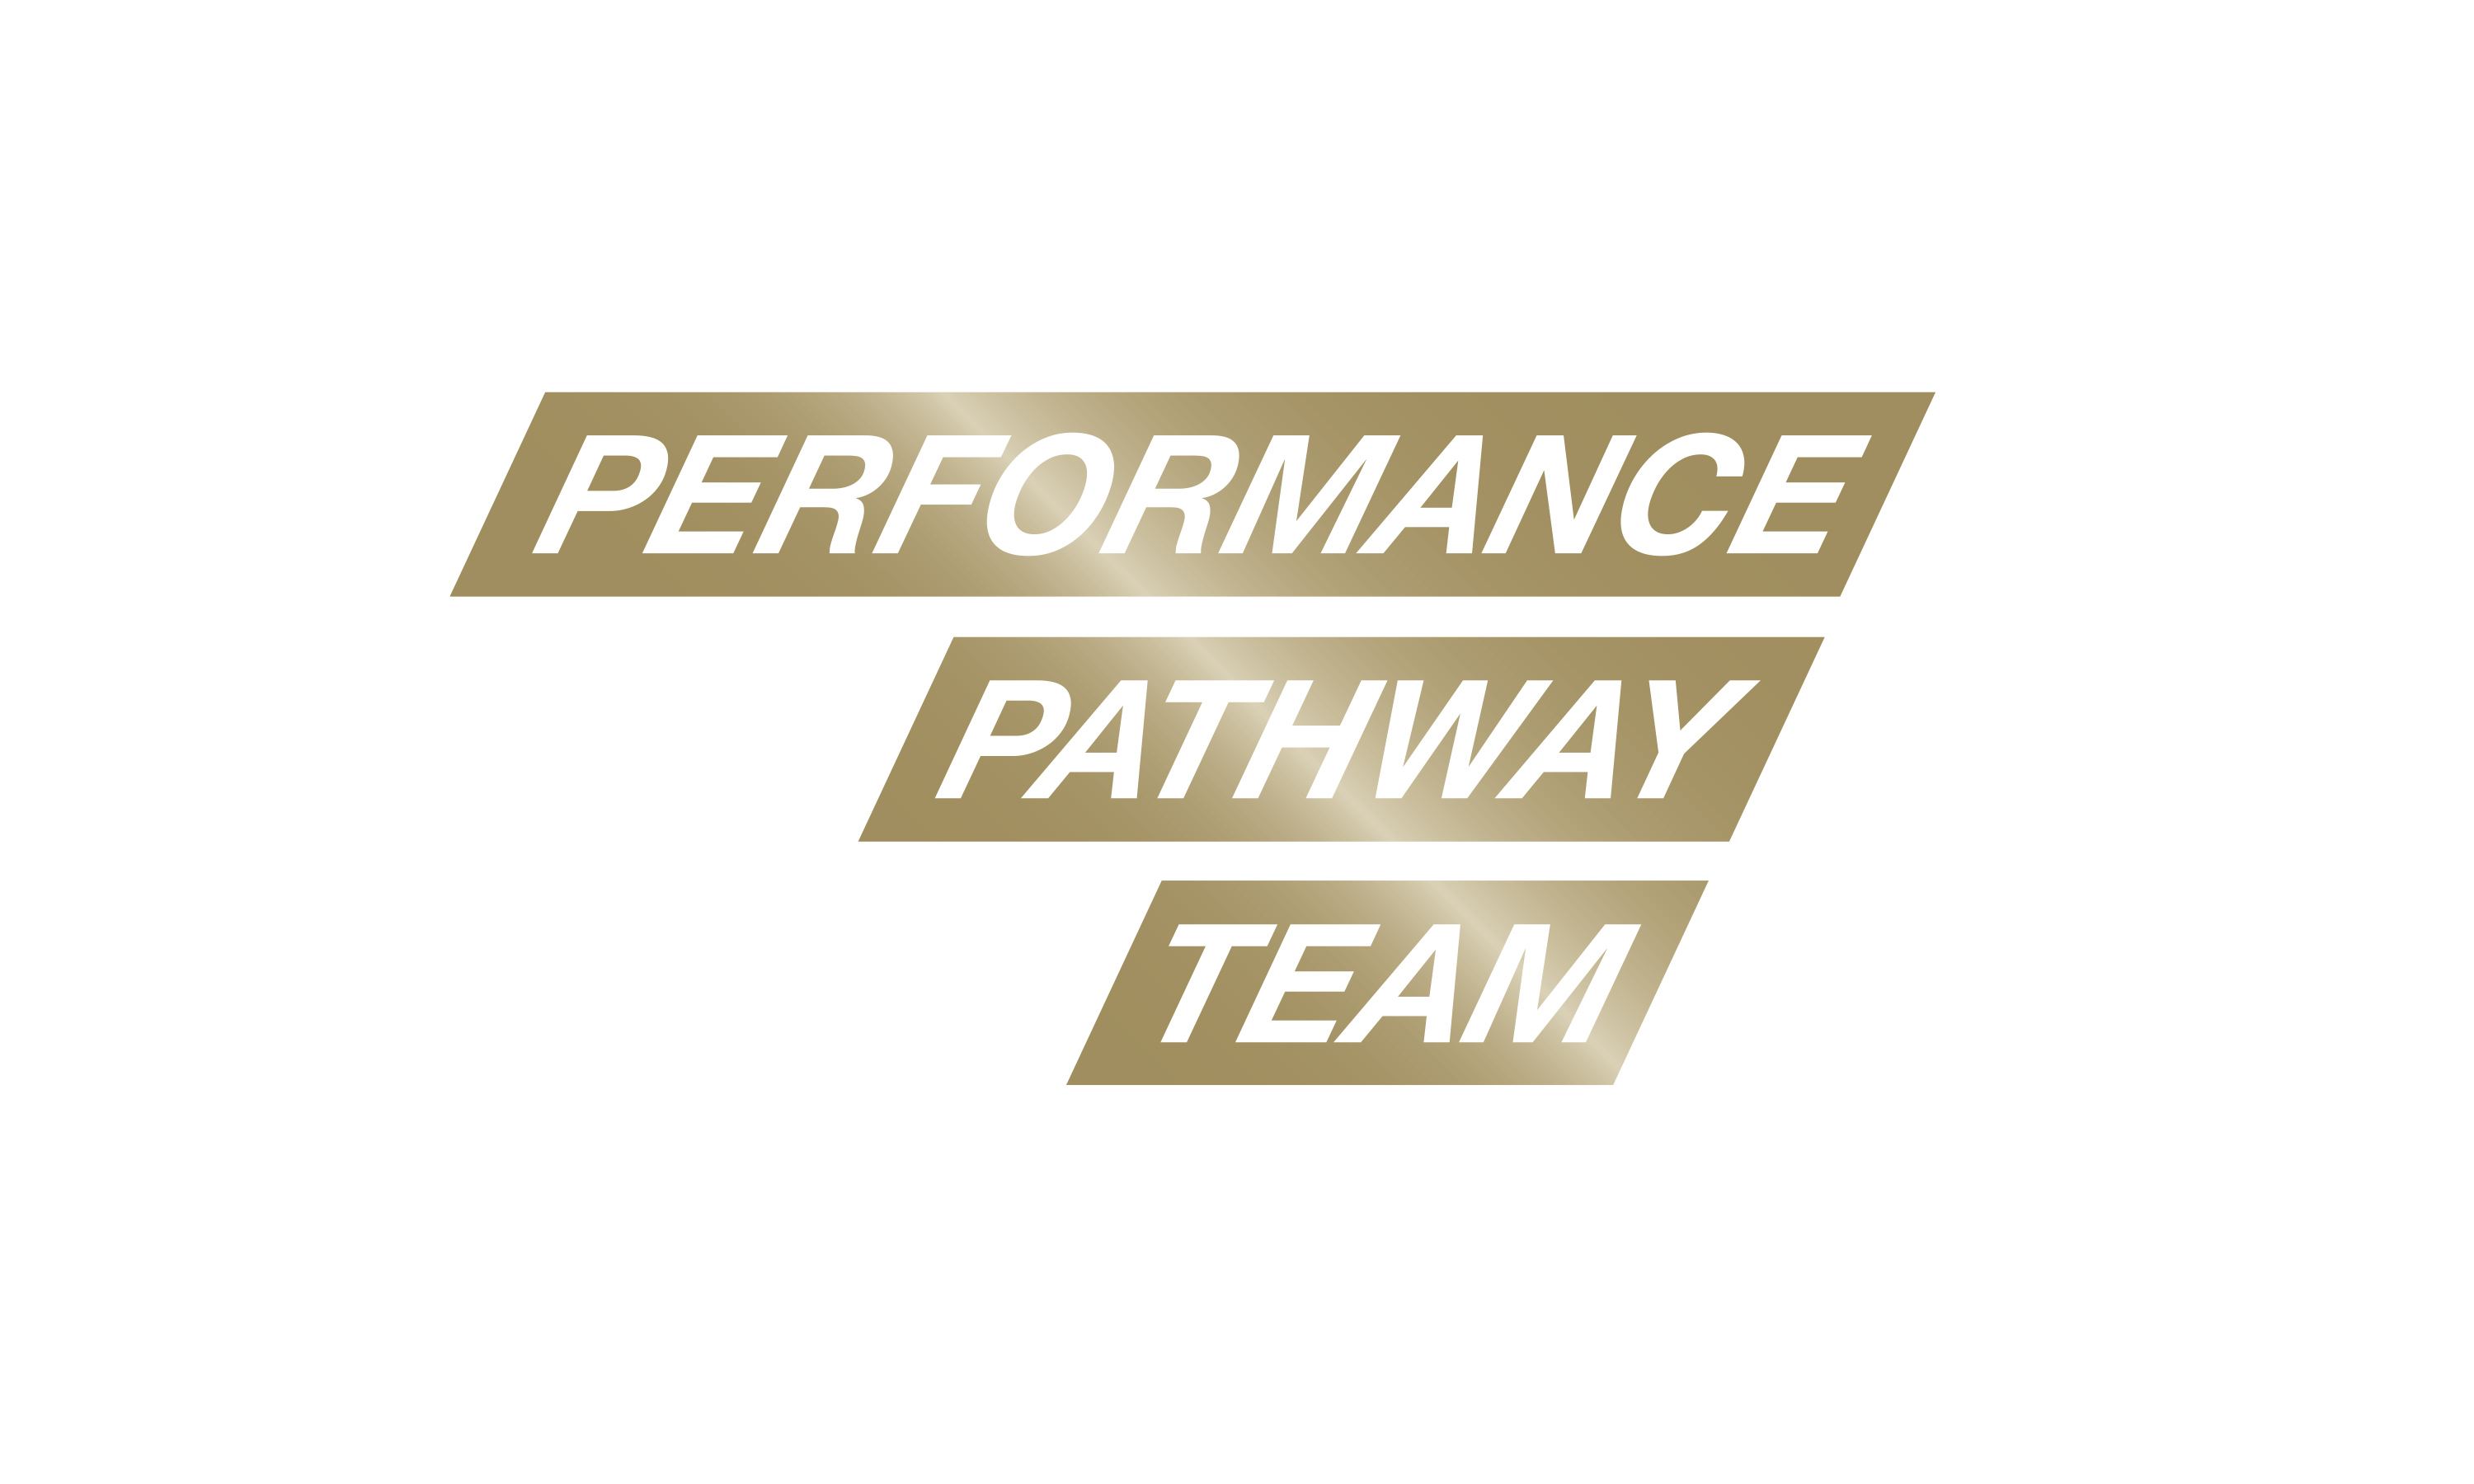 Branding by Neon - Sports branding - UK Sport Performance Pathway Team logo designed by Dana Robertson